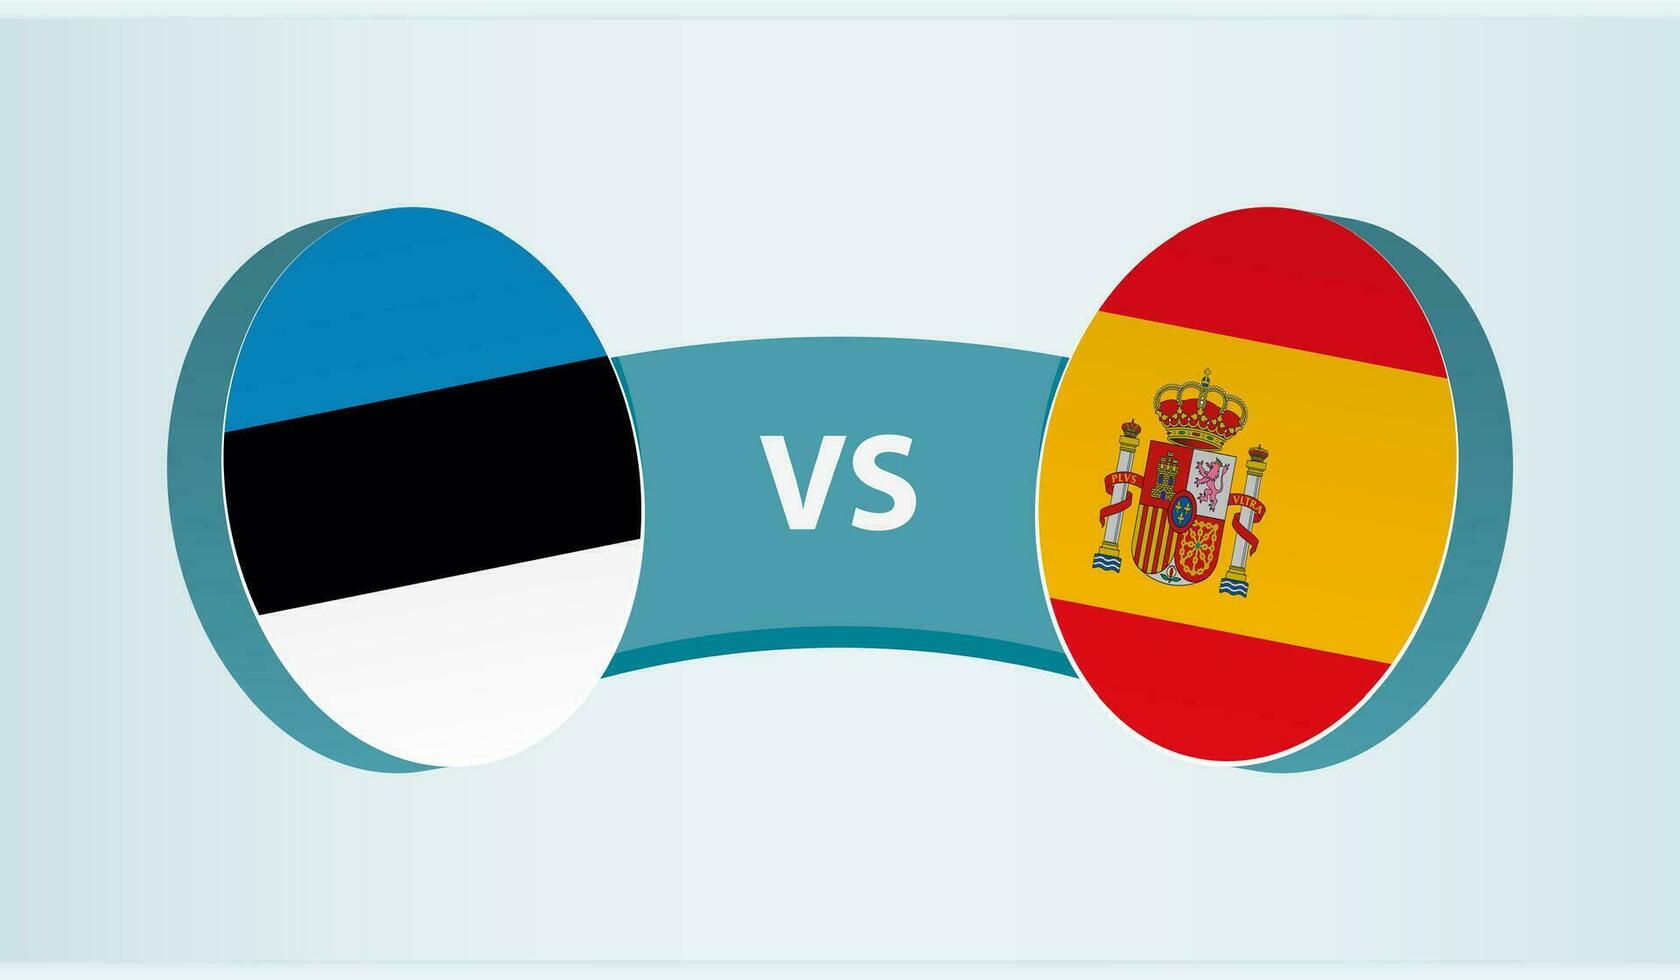 Estonia versus Spain, team sports competition concept. vector